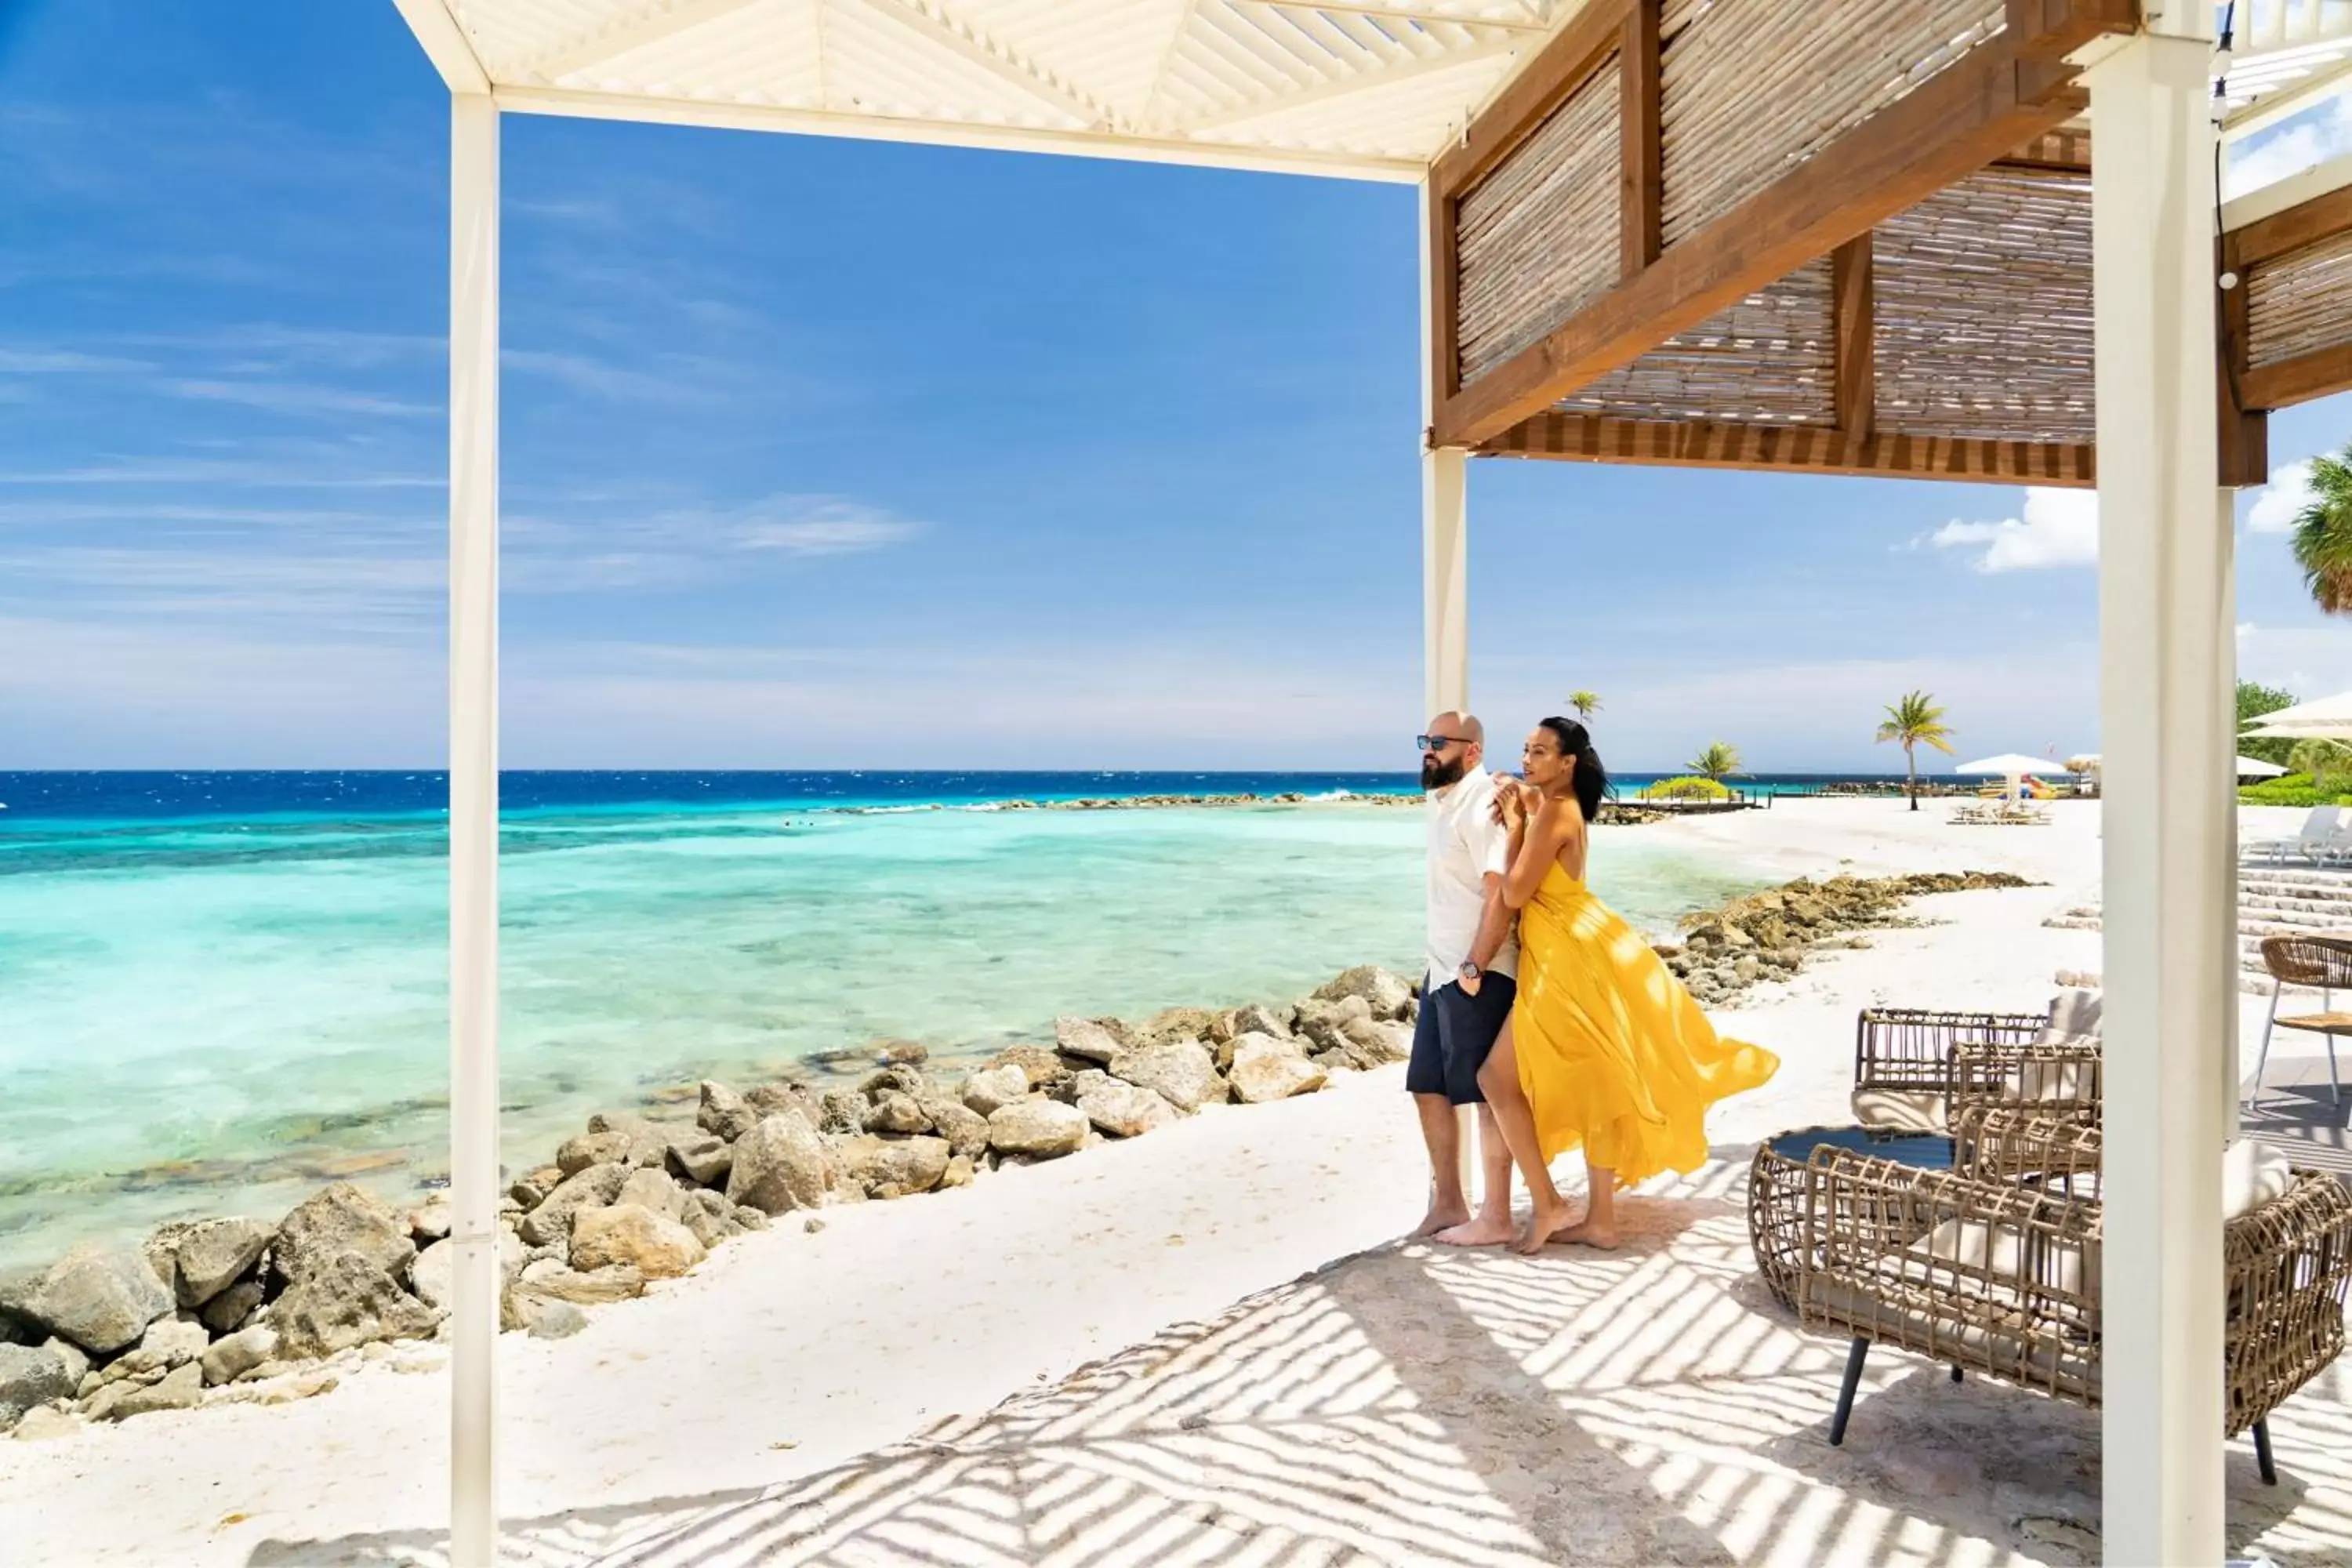 Area and facilities in Curaçao Marriott Beach Resort